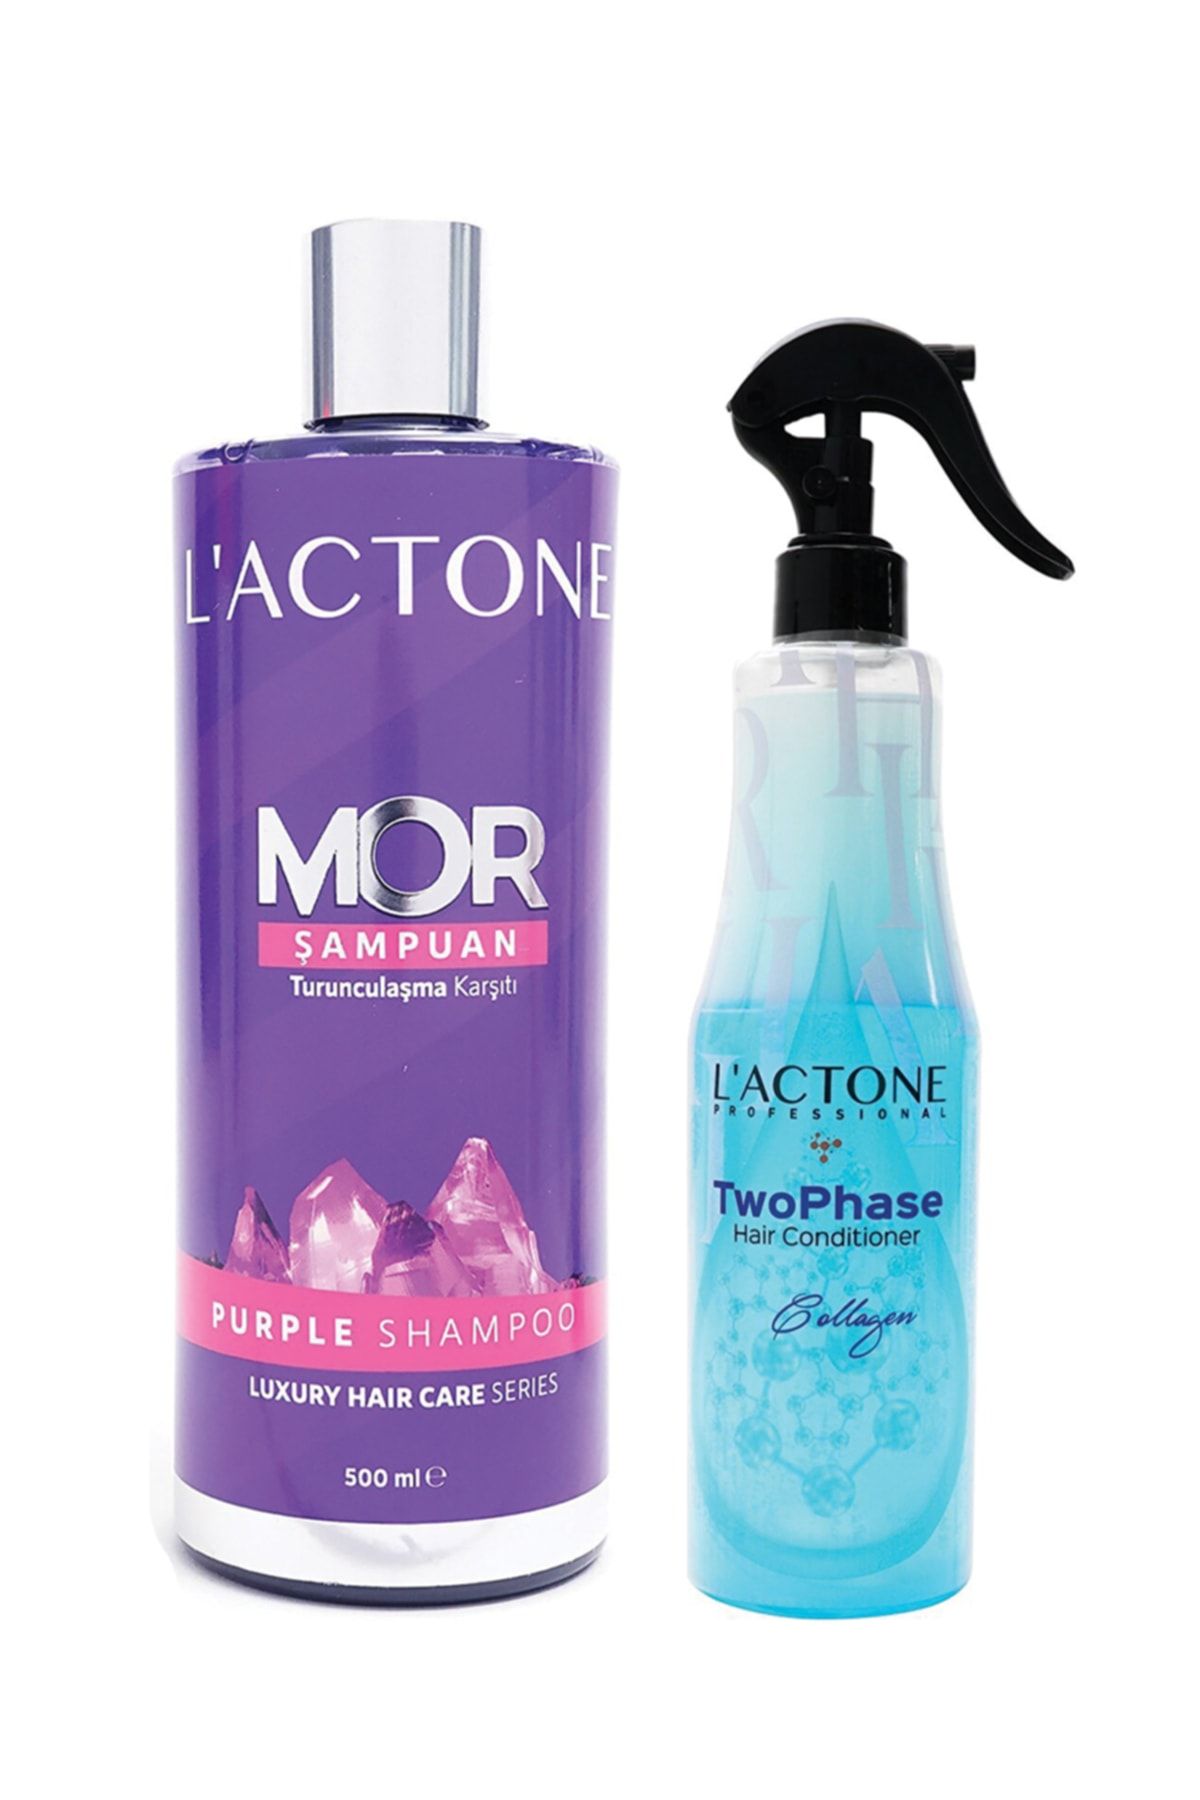 L'ACTONE Mor Şampuan + Kolajen Fön Suyu Saç Bakım Seti 3